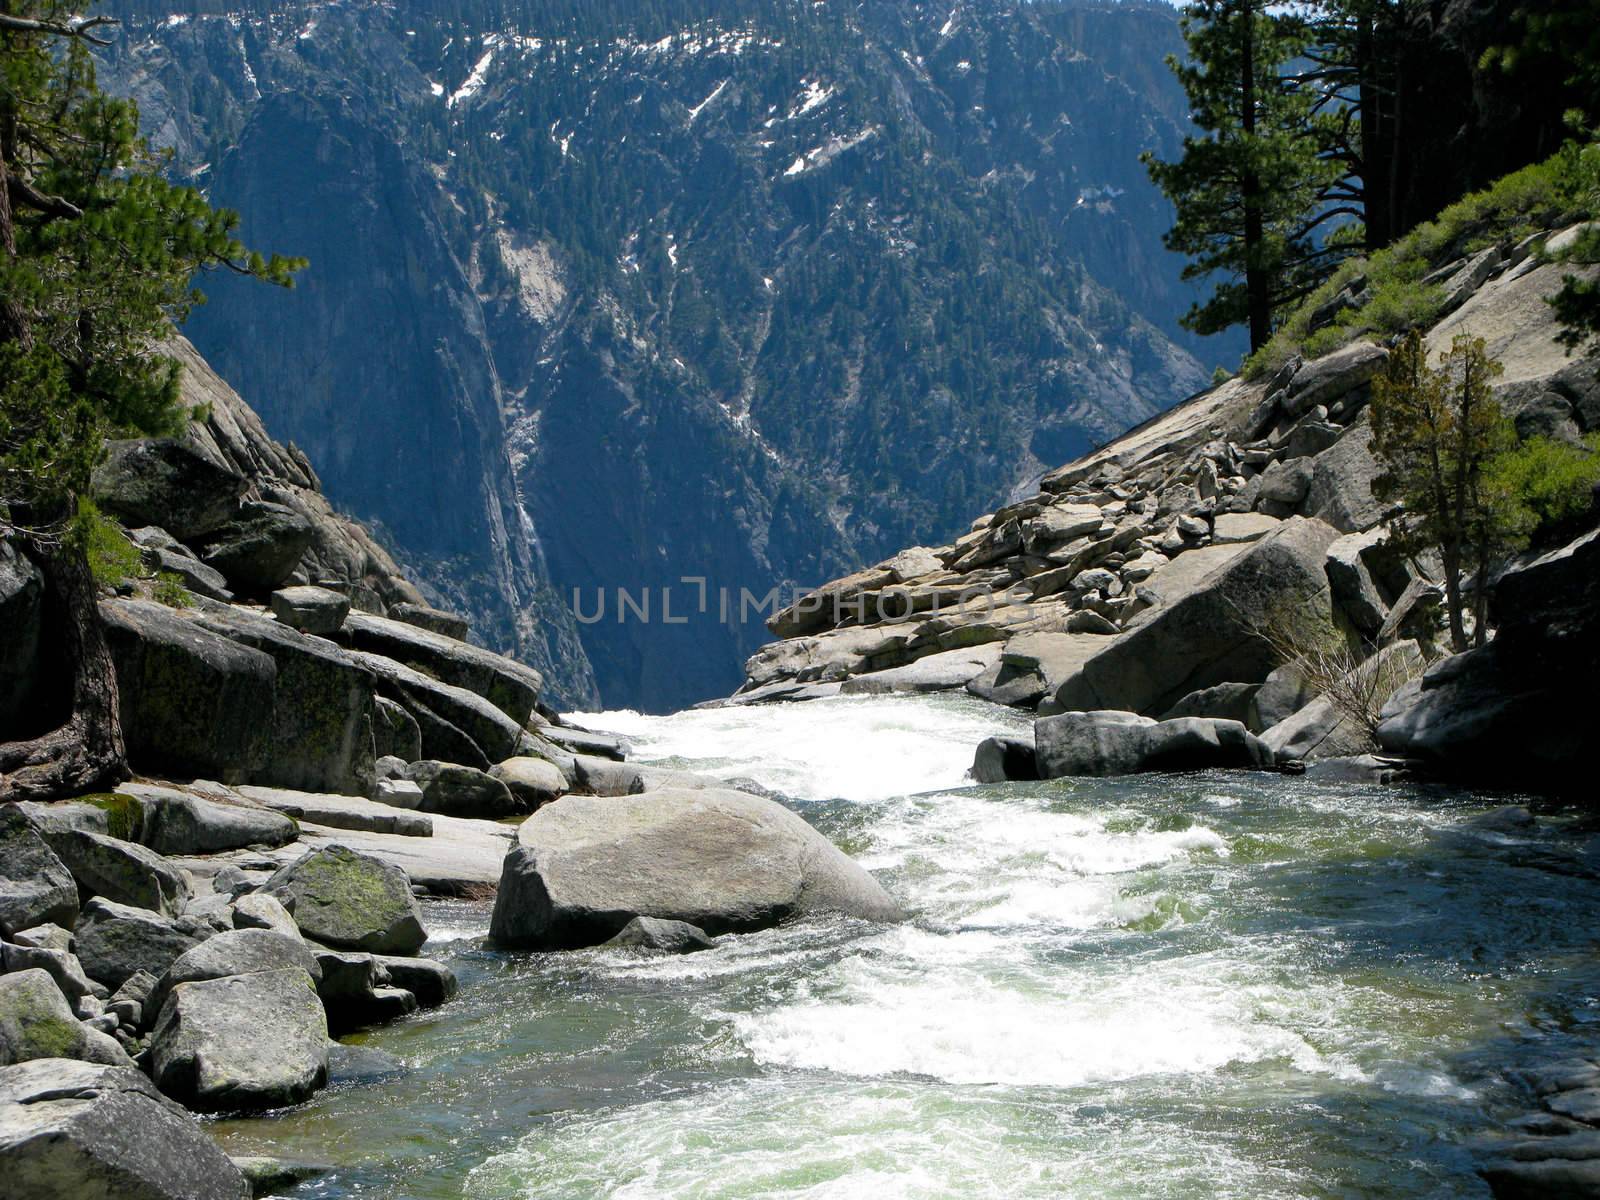 Rushing river at top of Yosemite Falls prior to drop